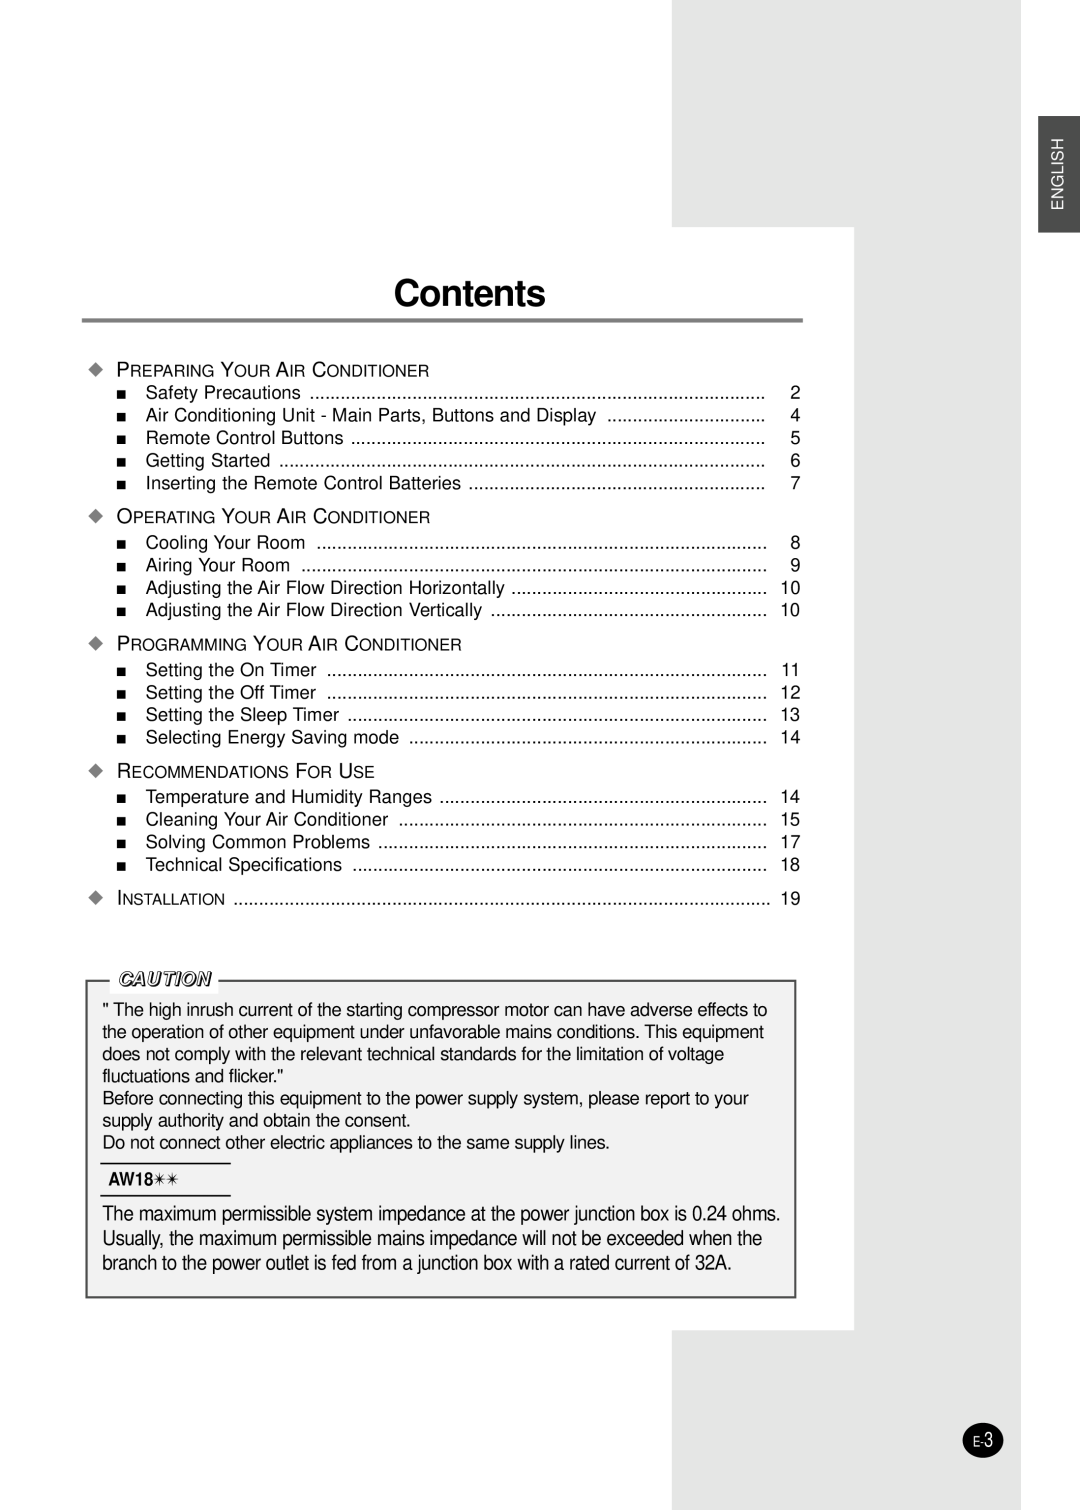 Samsung AW12FADBA manuel dutilisation Contents, AW18 